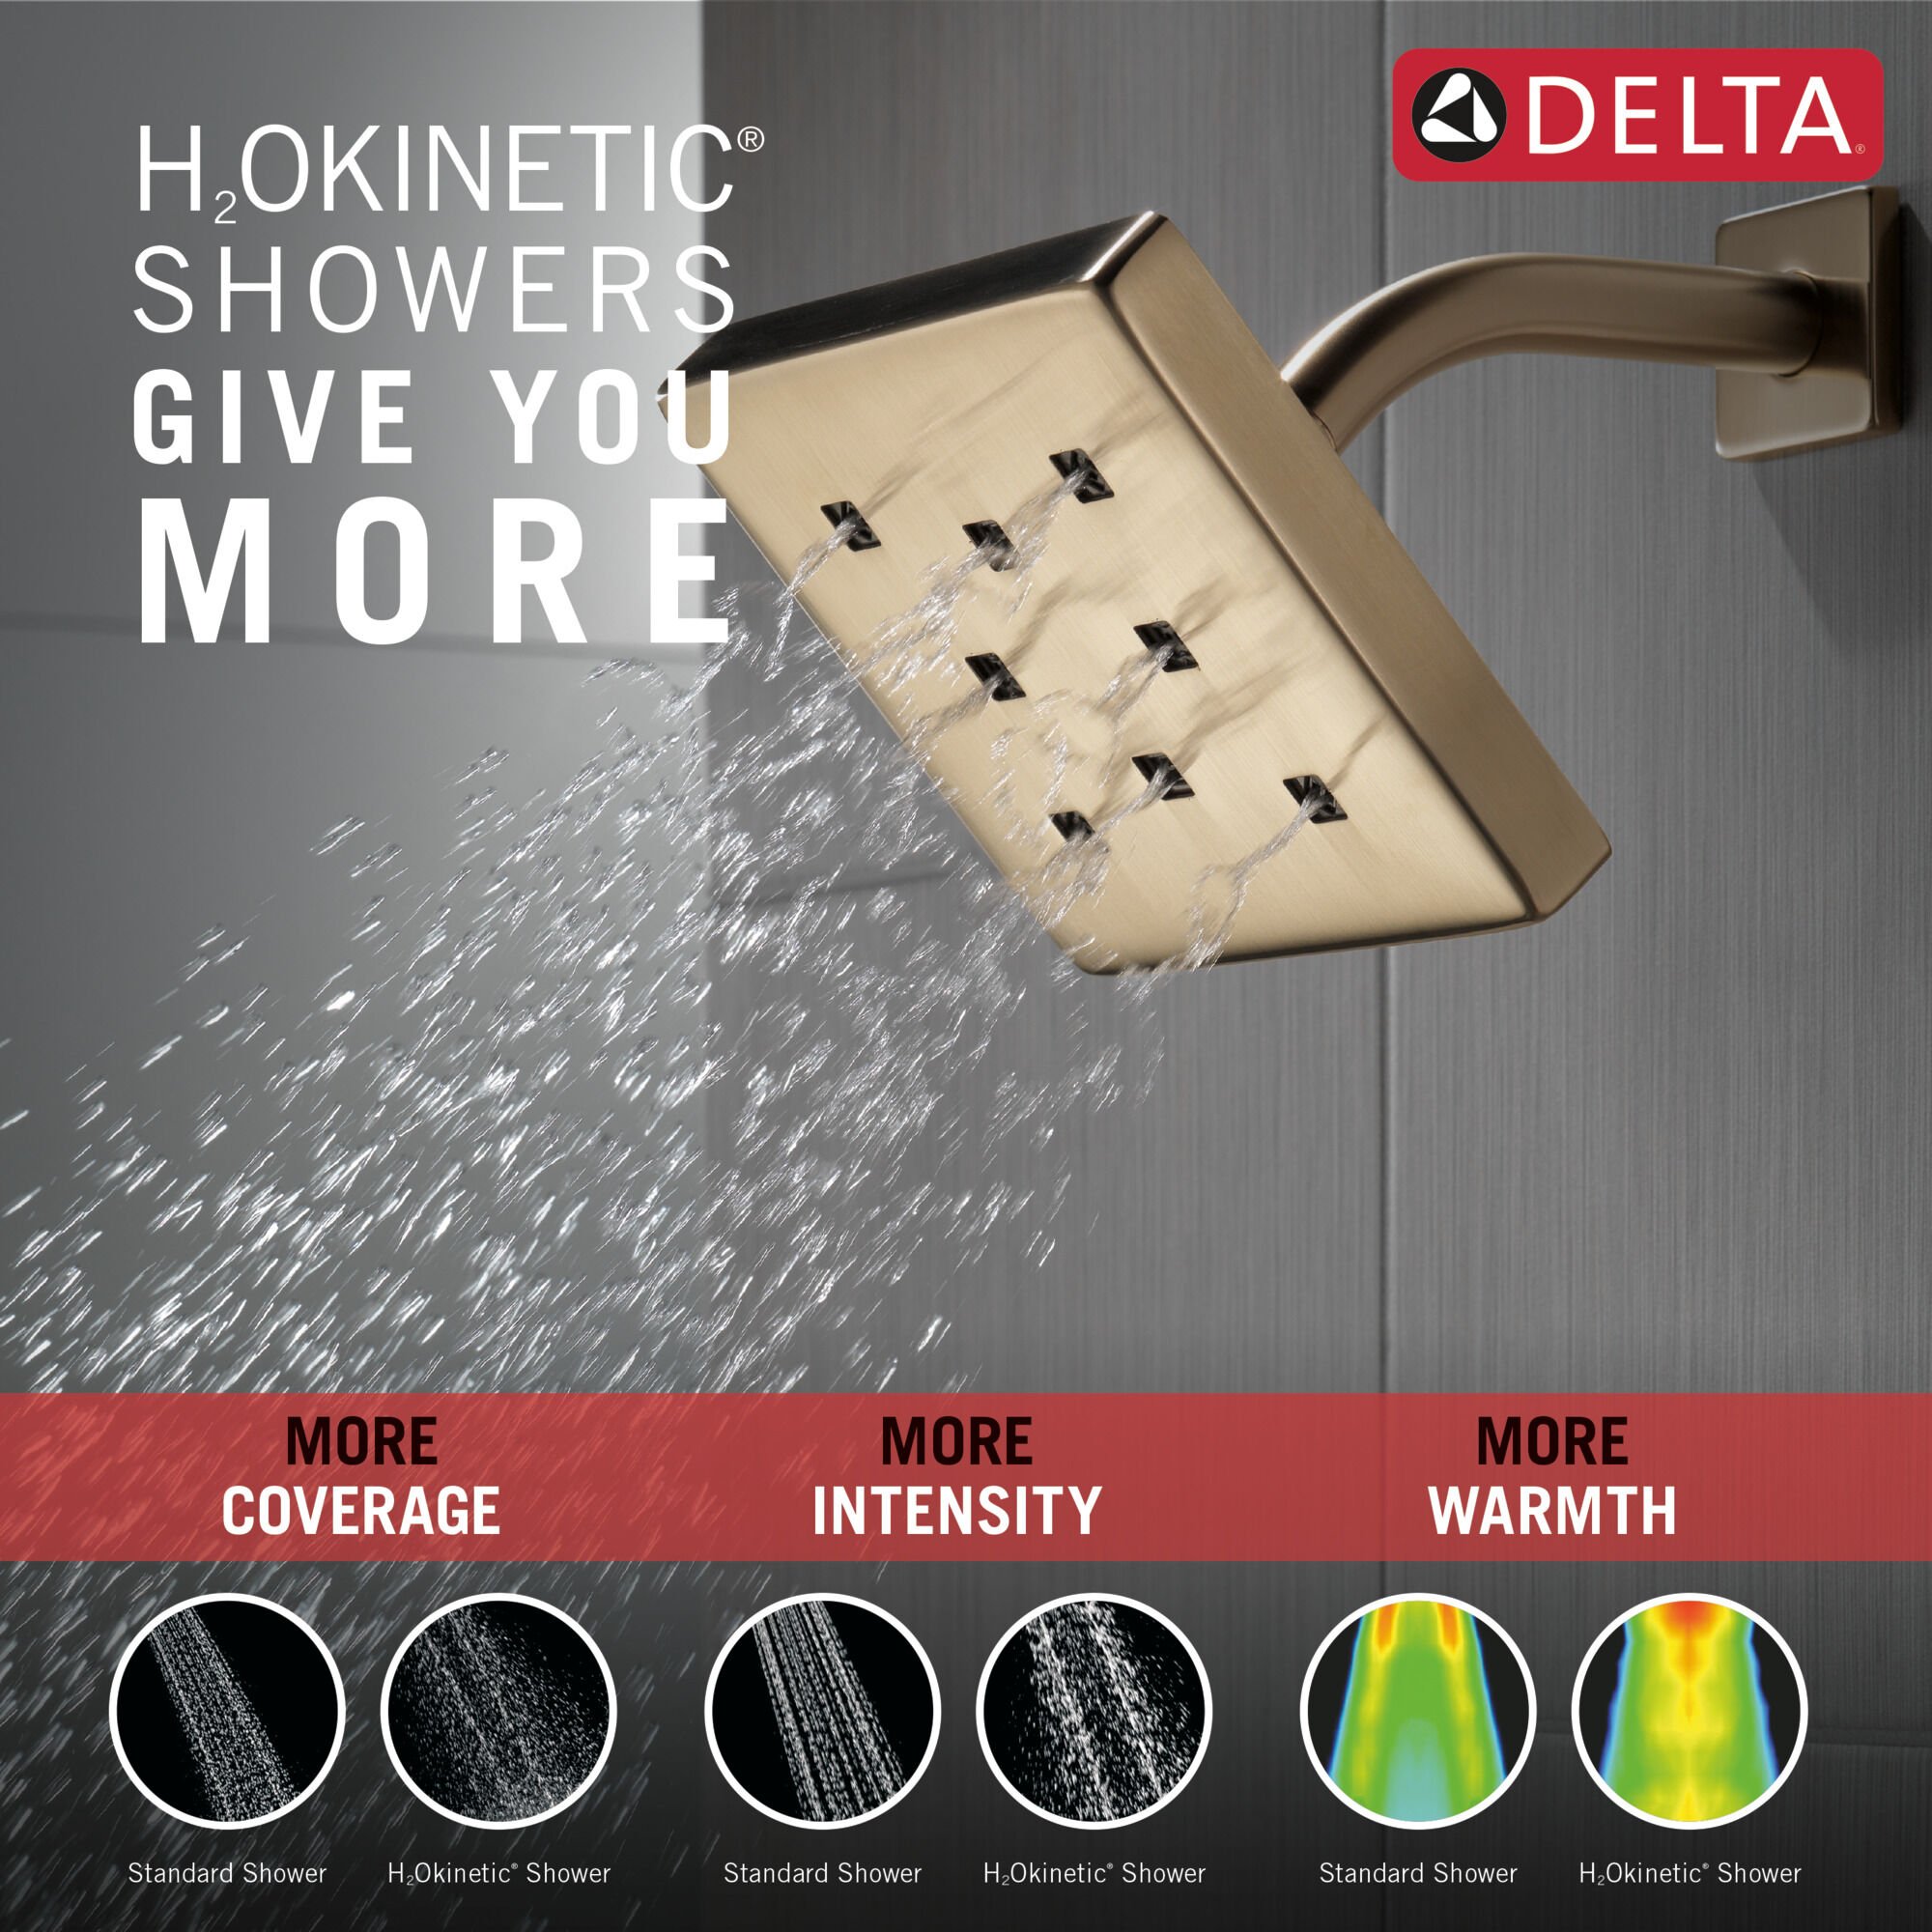 H2Okinetic® Single-Setting Metal Raincan Shower Head in Lumicoat